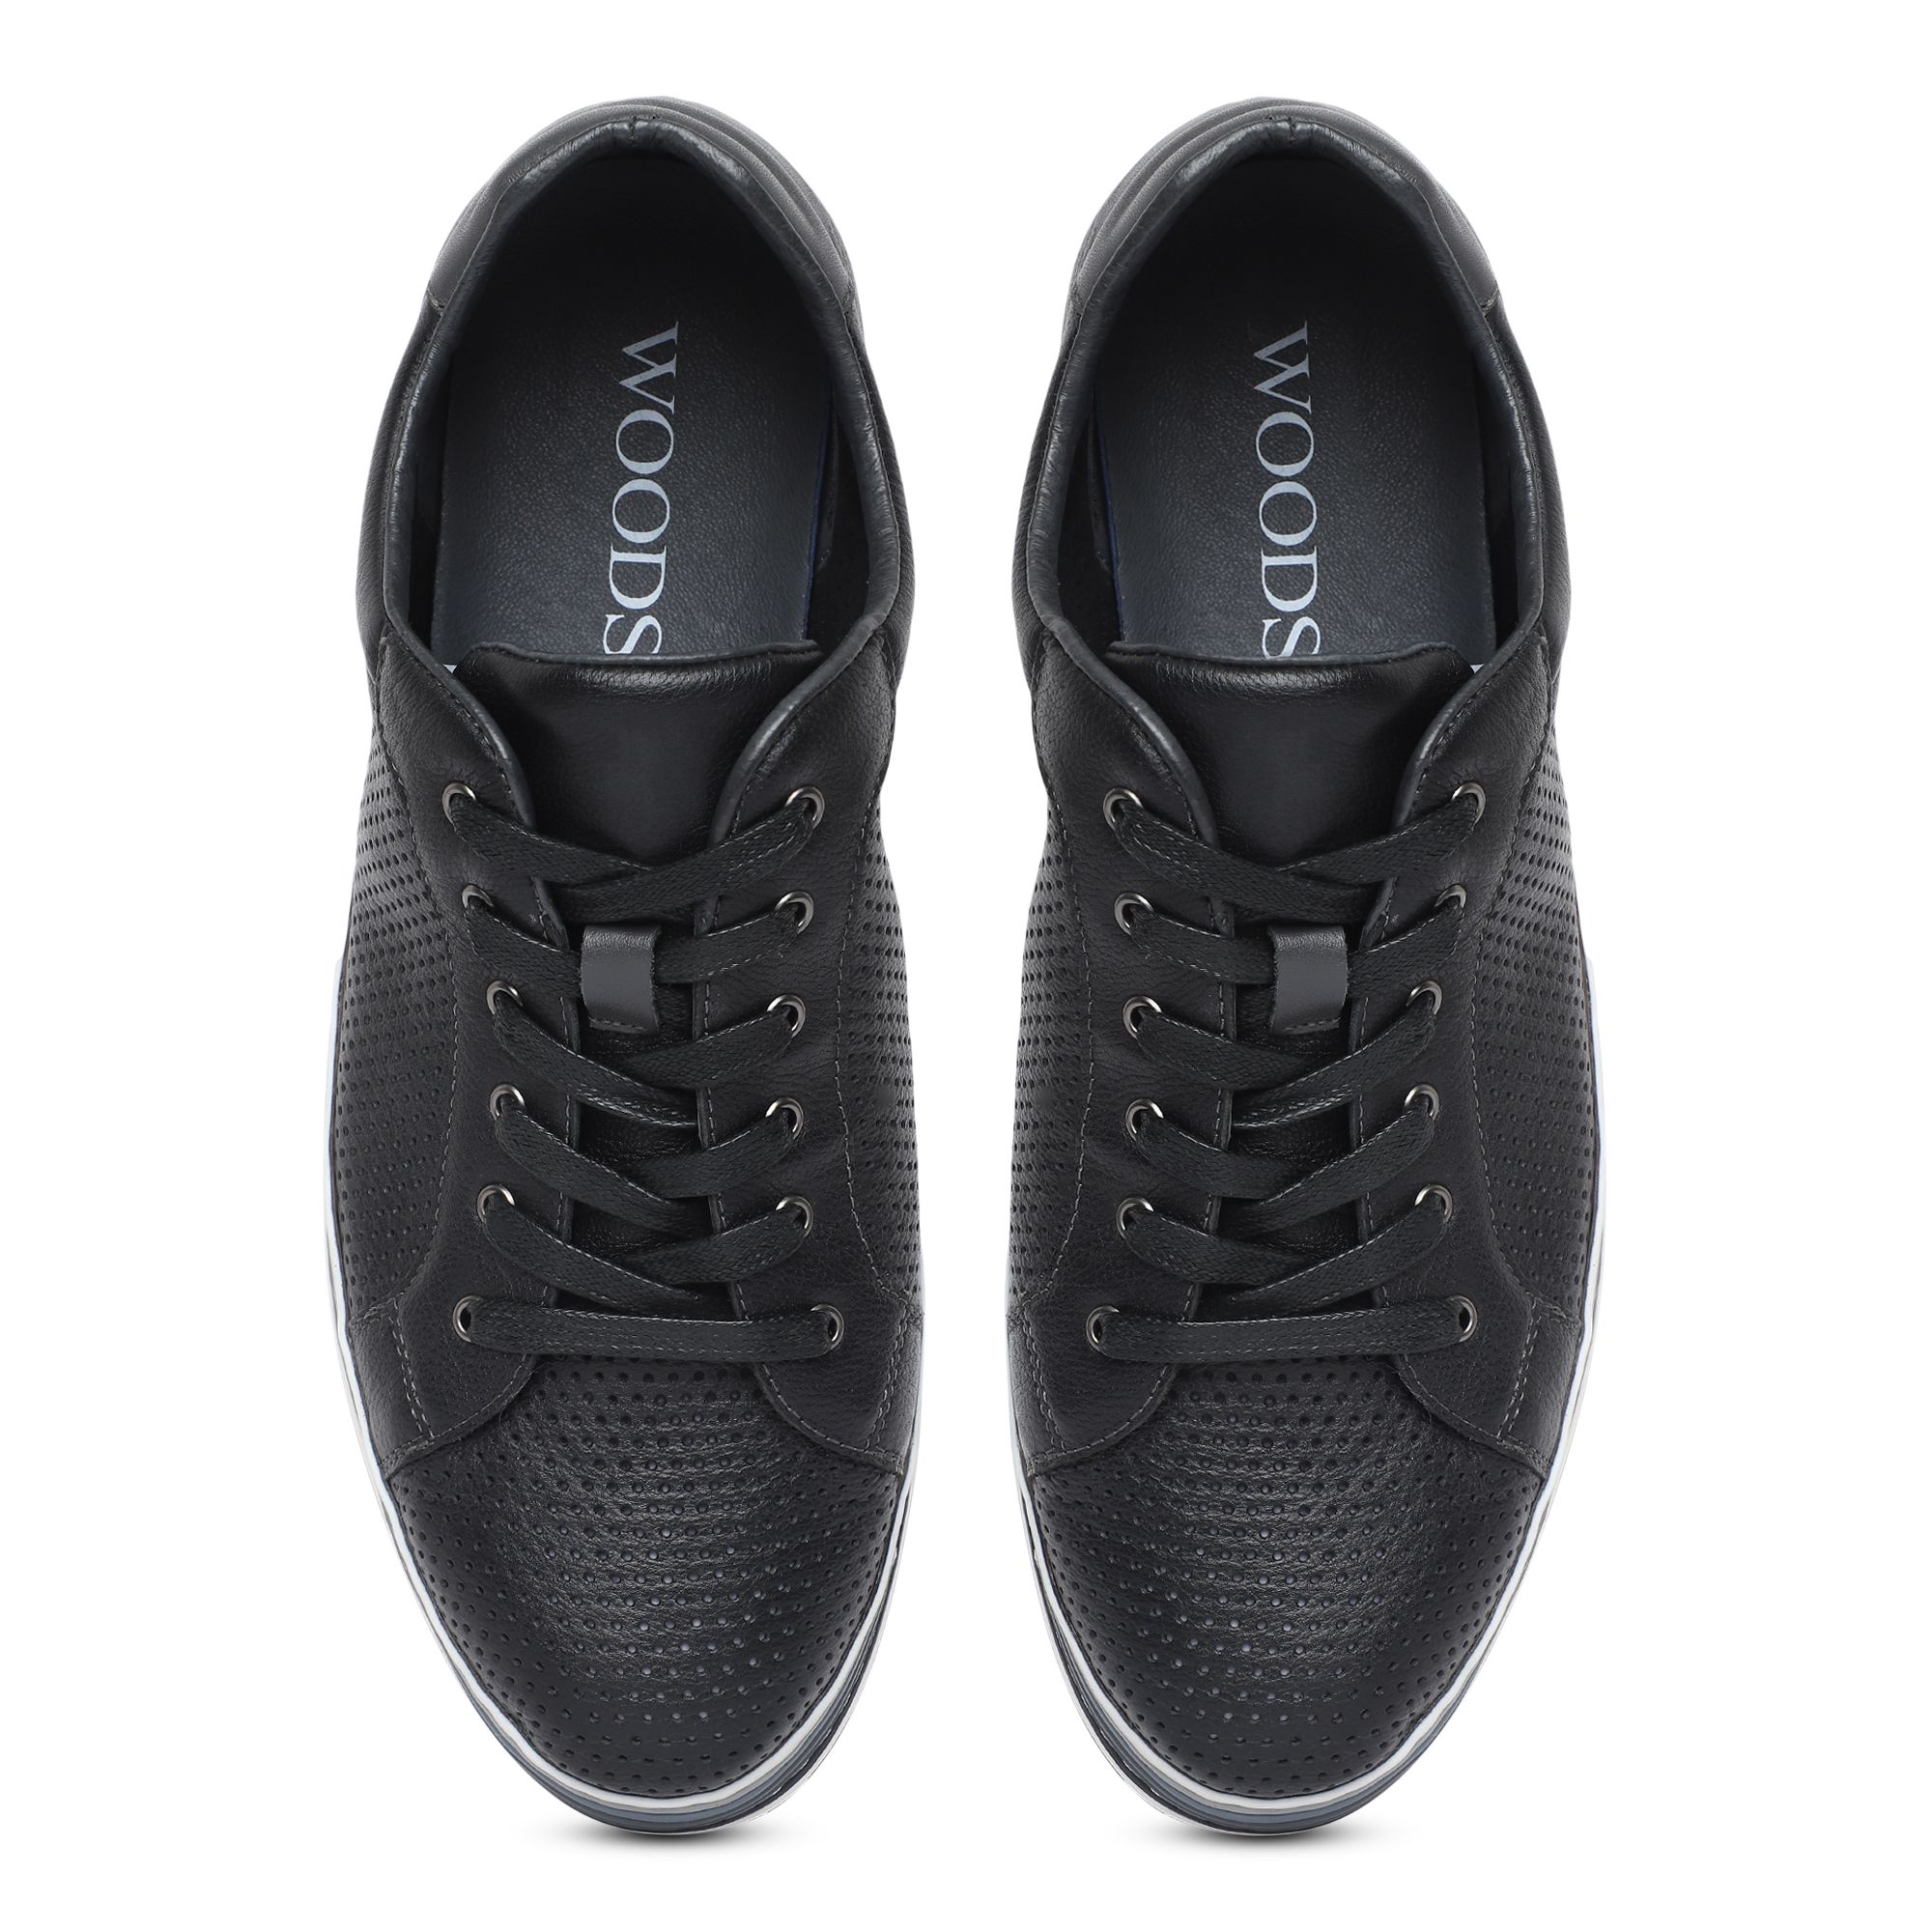 Black/Grey casual sneaker for men